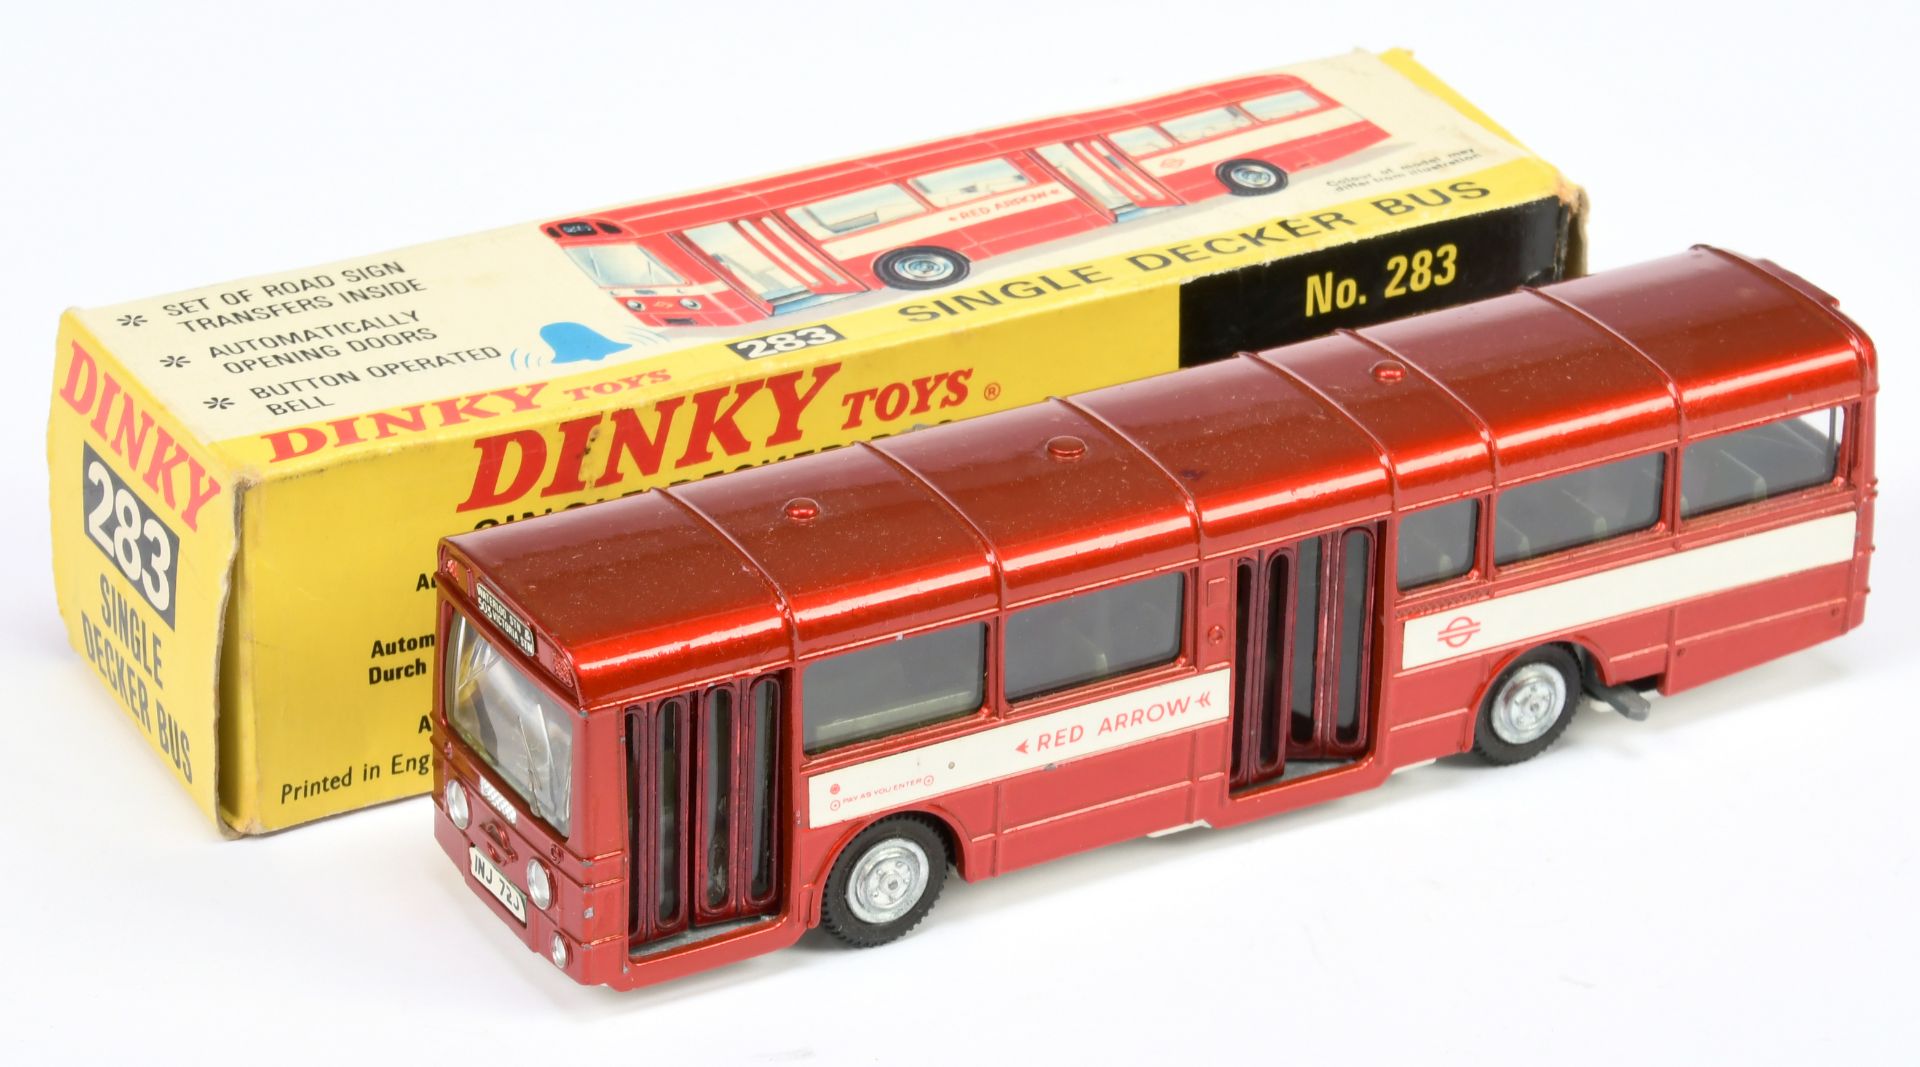 Dinky Toys 283 Single Decker Coach "Red Arrow" - Metallic red body, silver trim (interior super d...